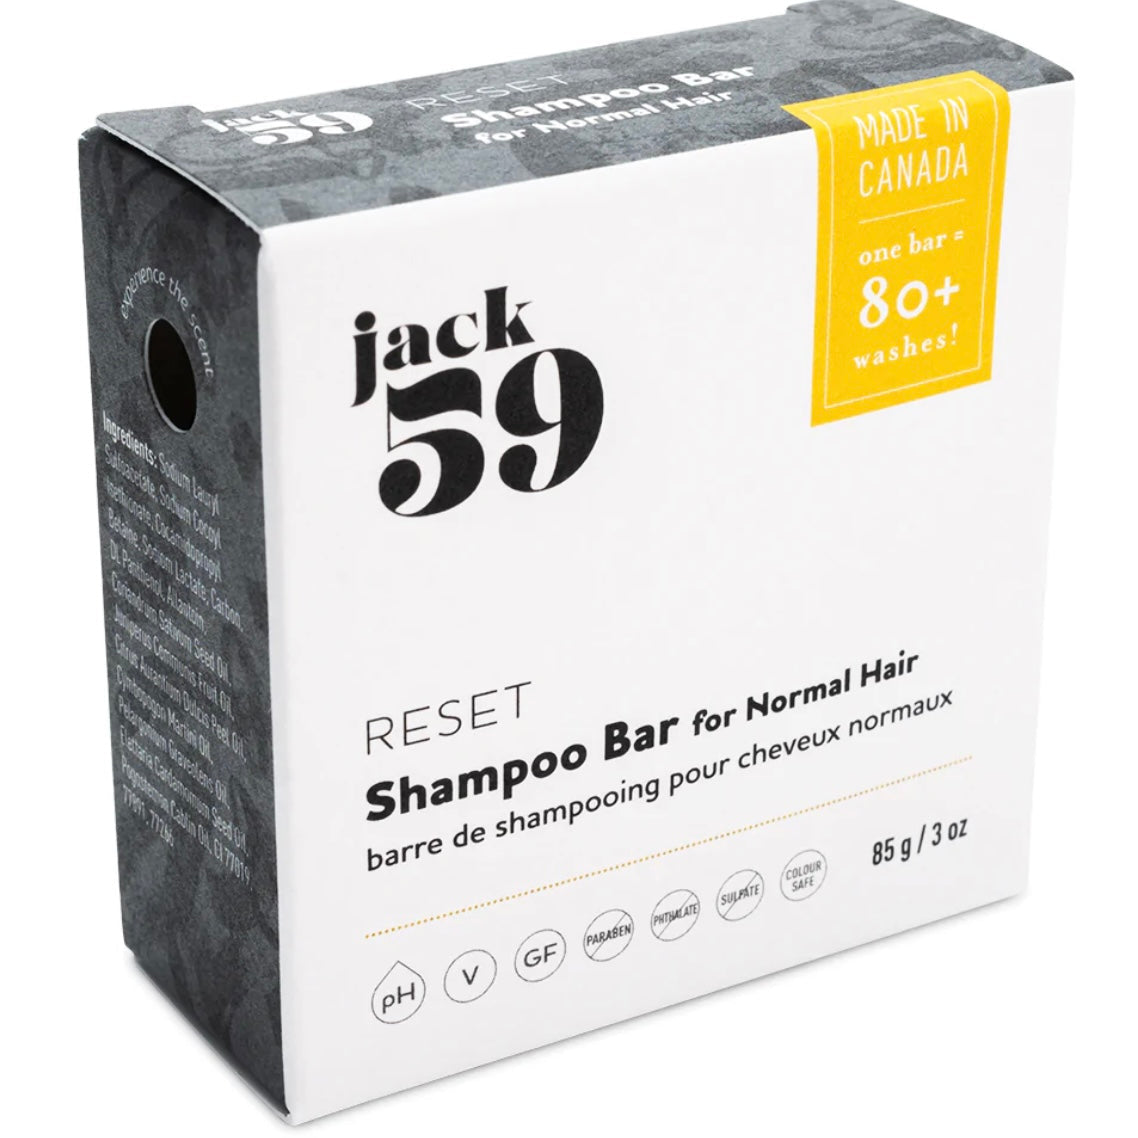 Jack59 Conditioner Bar